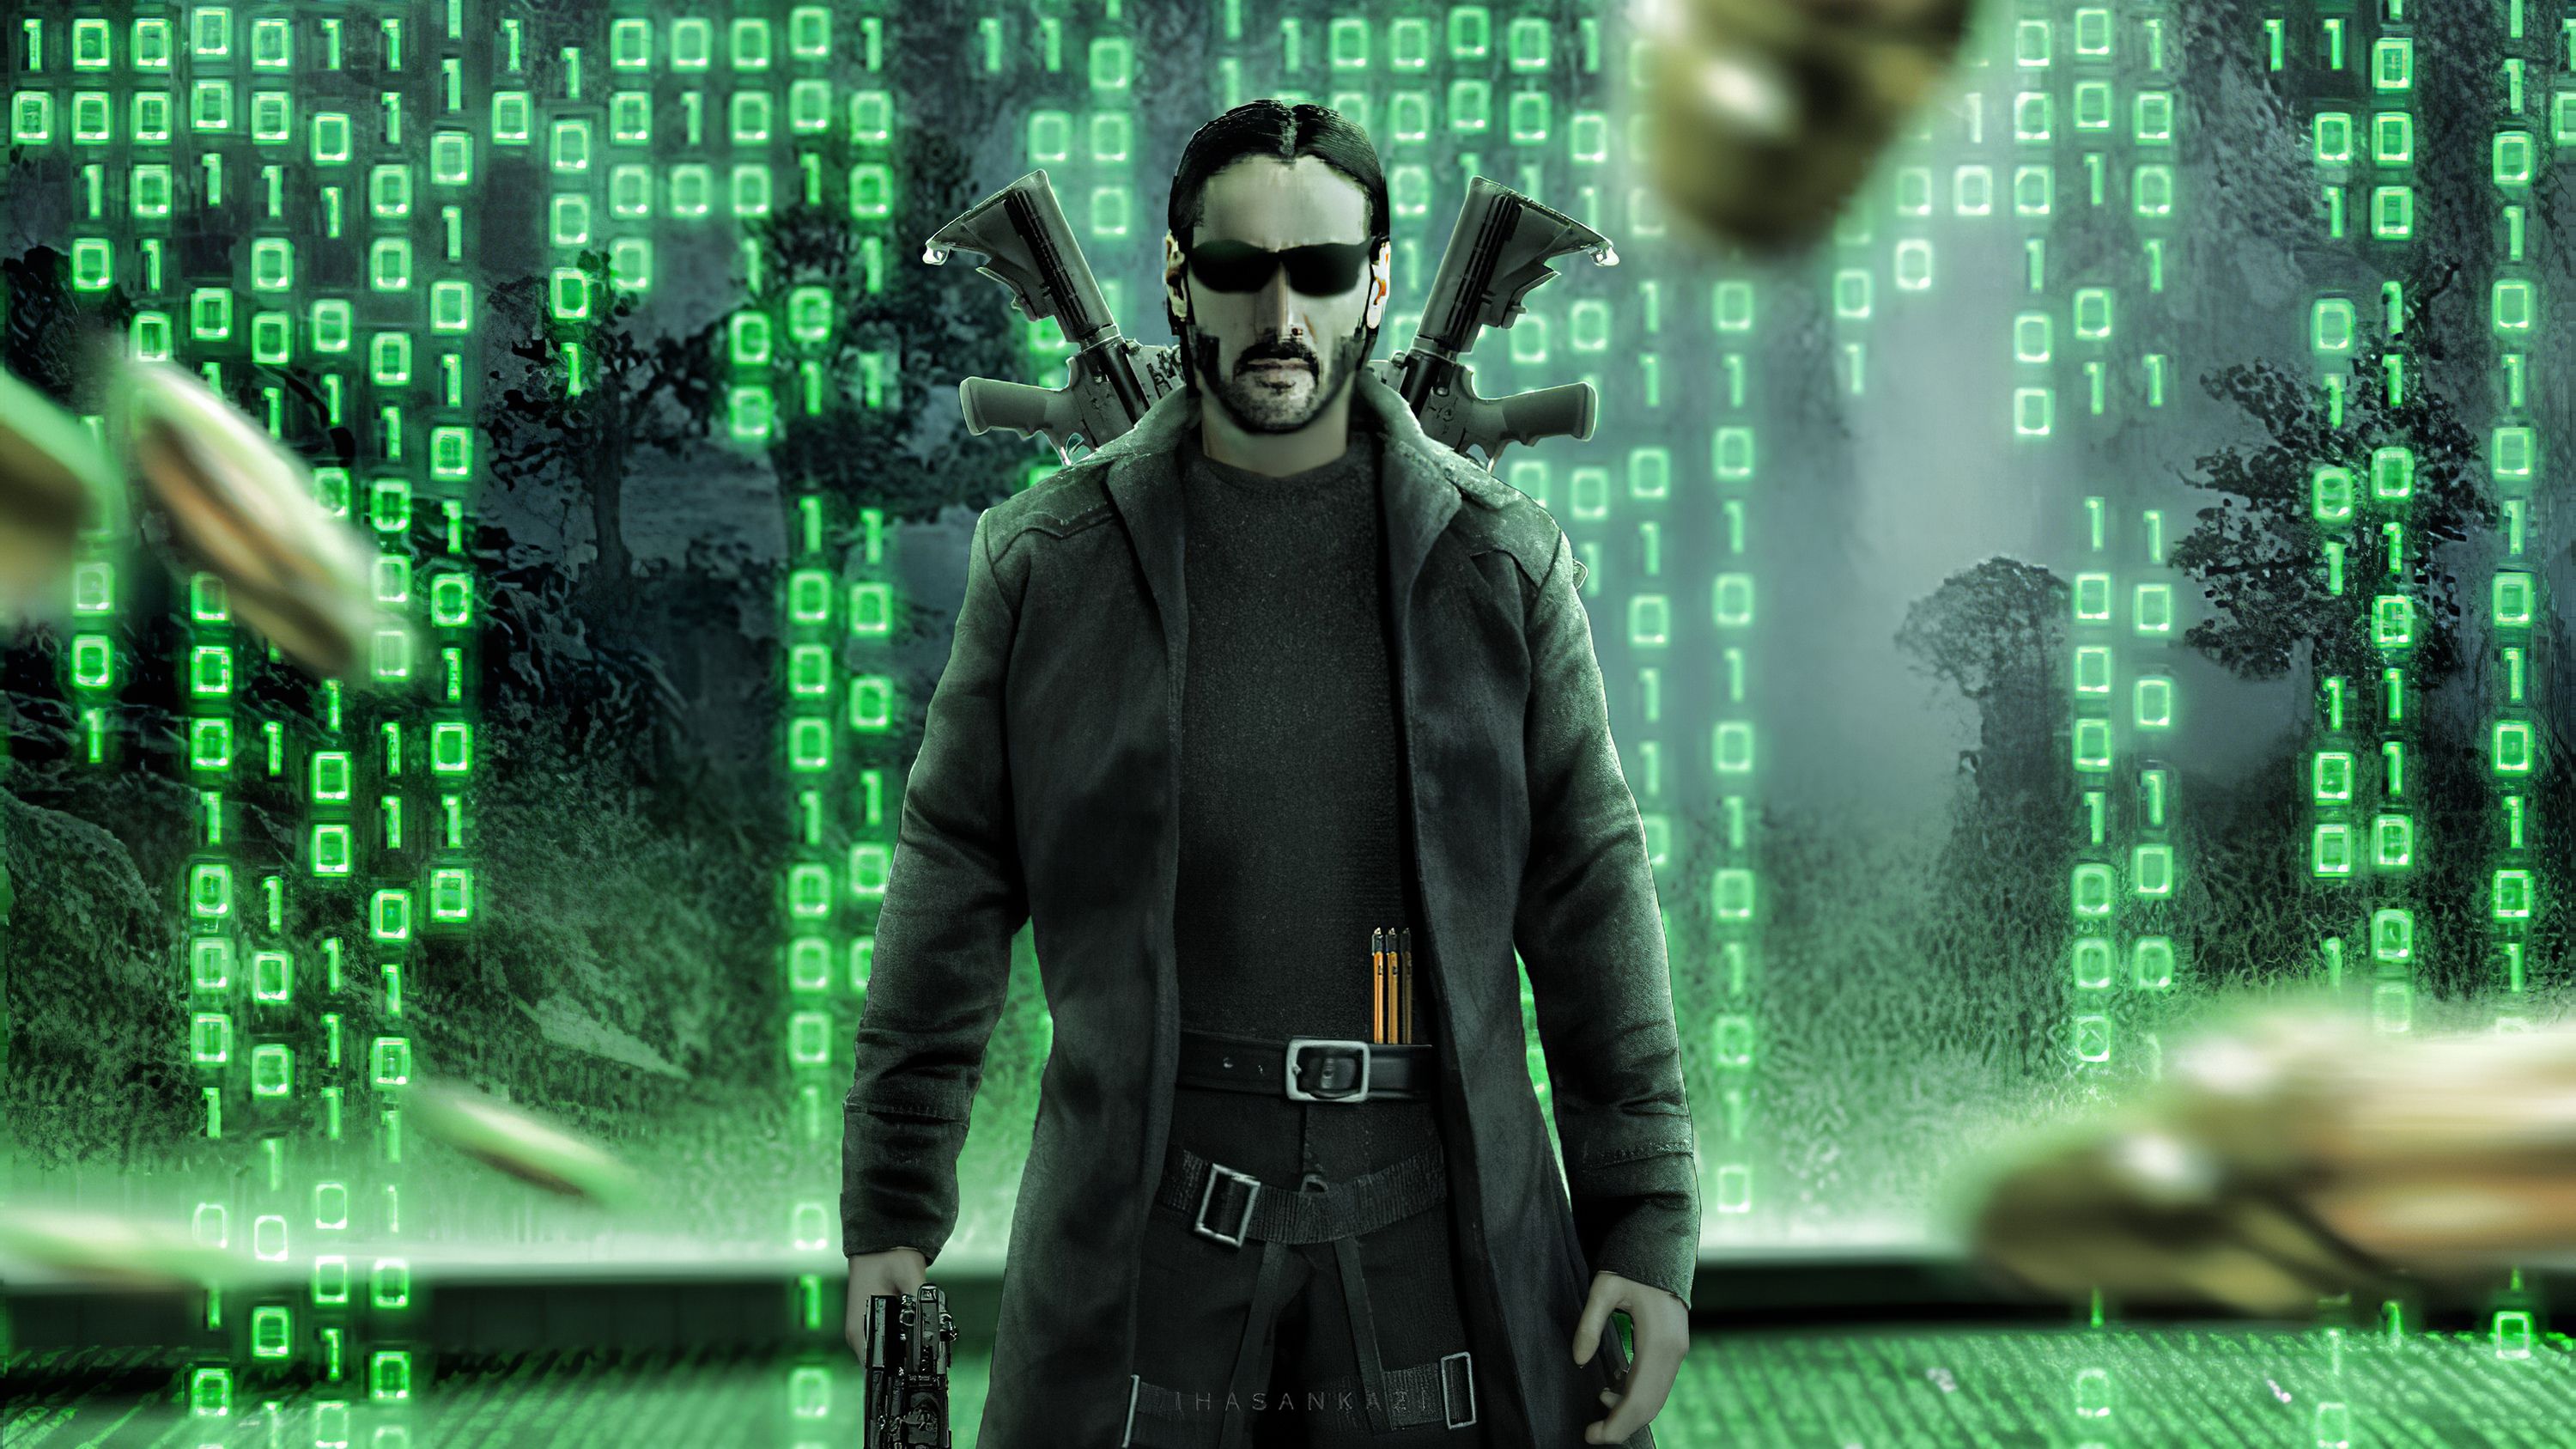 The Matrix 4K Wallpapers